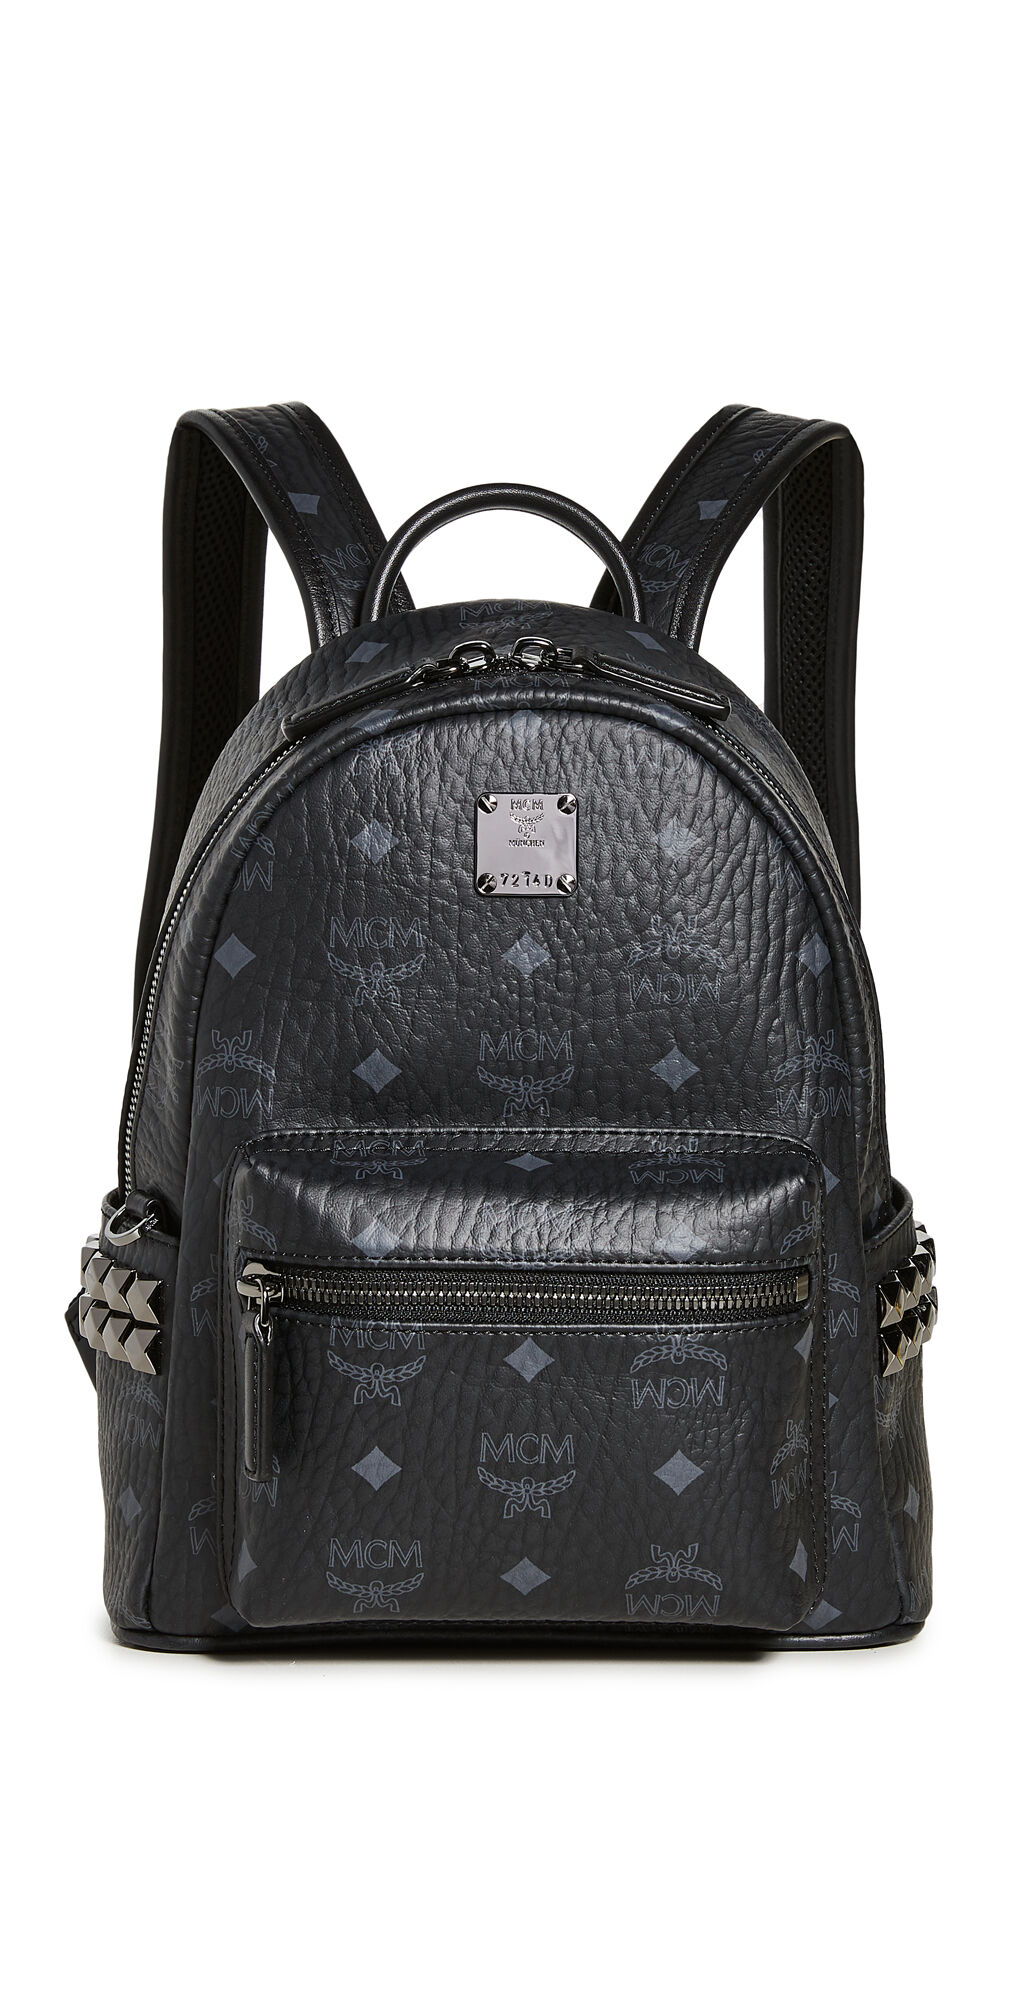 MCM Mini Stark Backpack Black One Size  Black  size:One Size